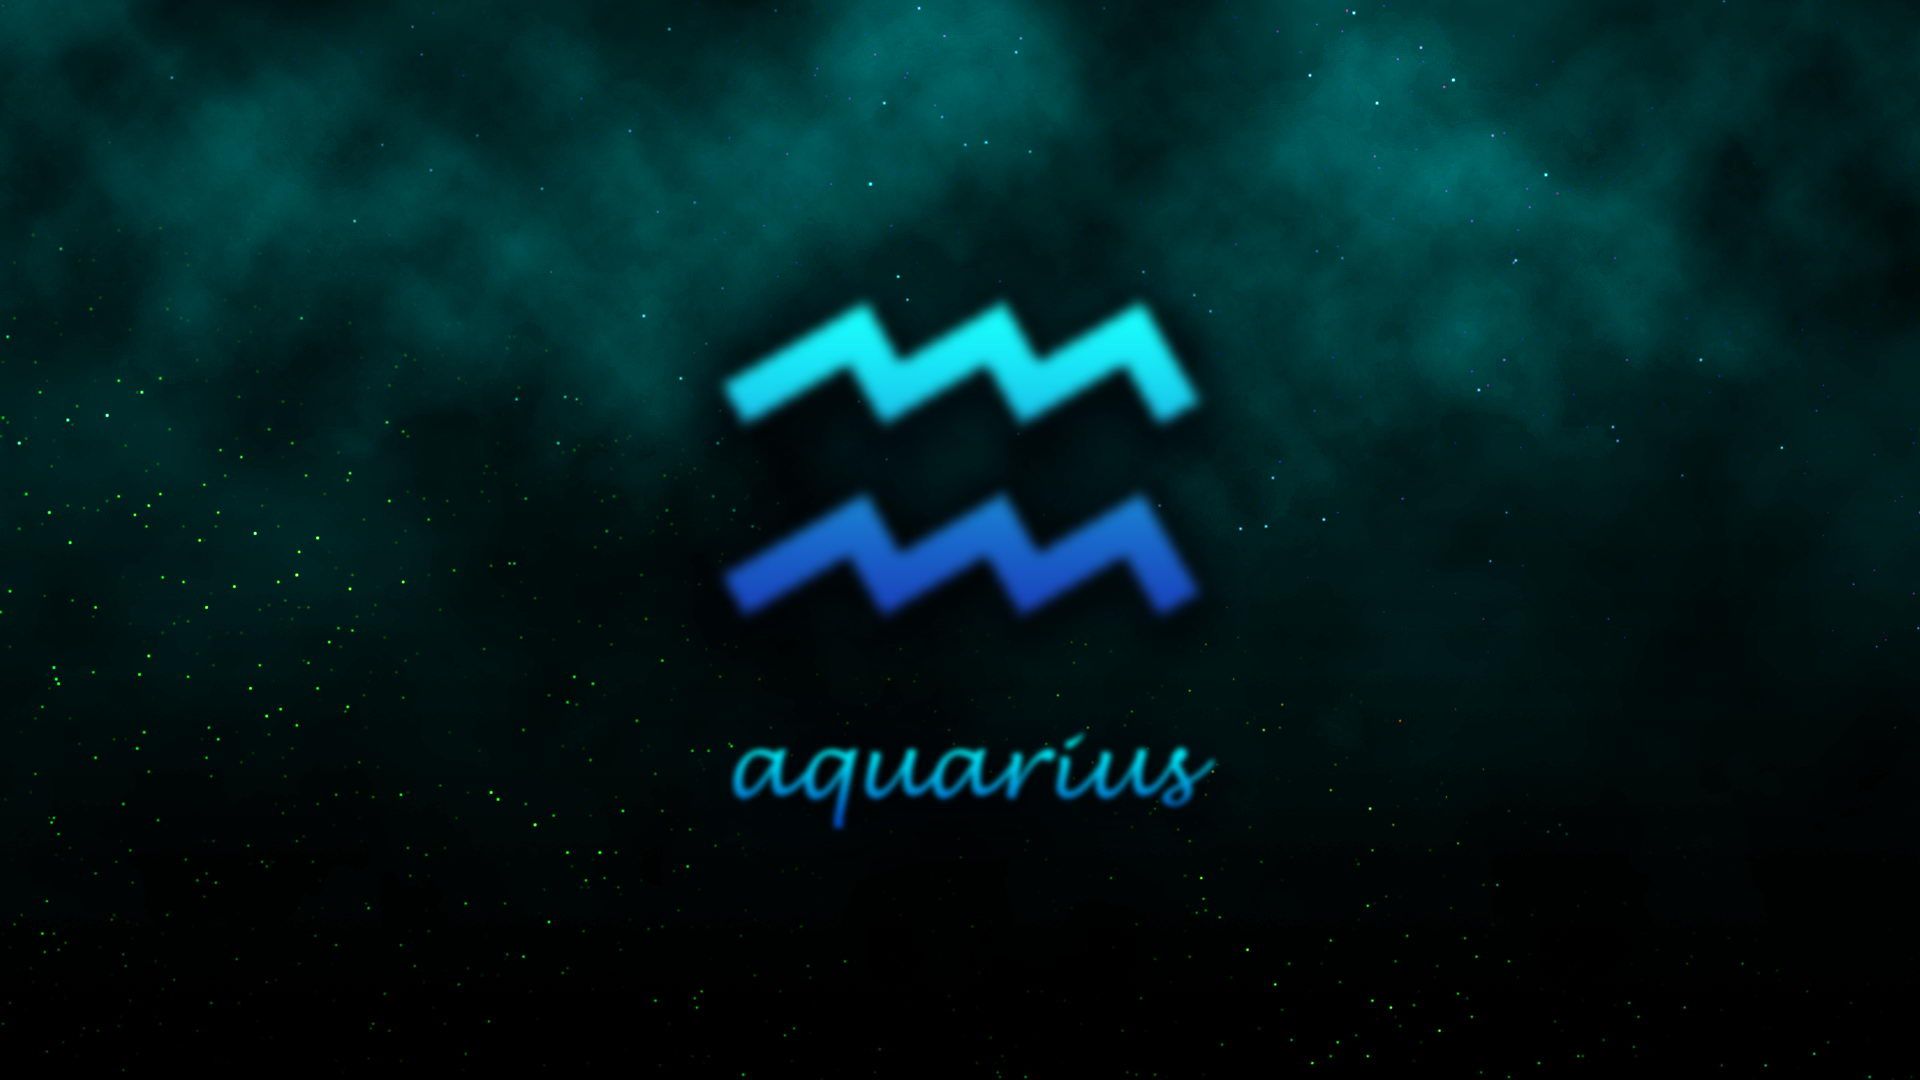 HD Aquarius Wallpaper Wiki